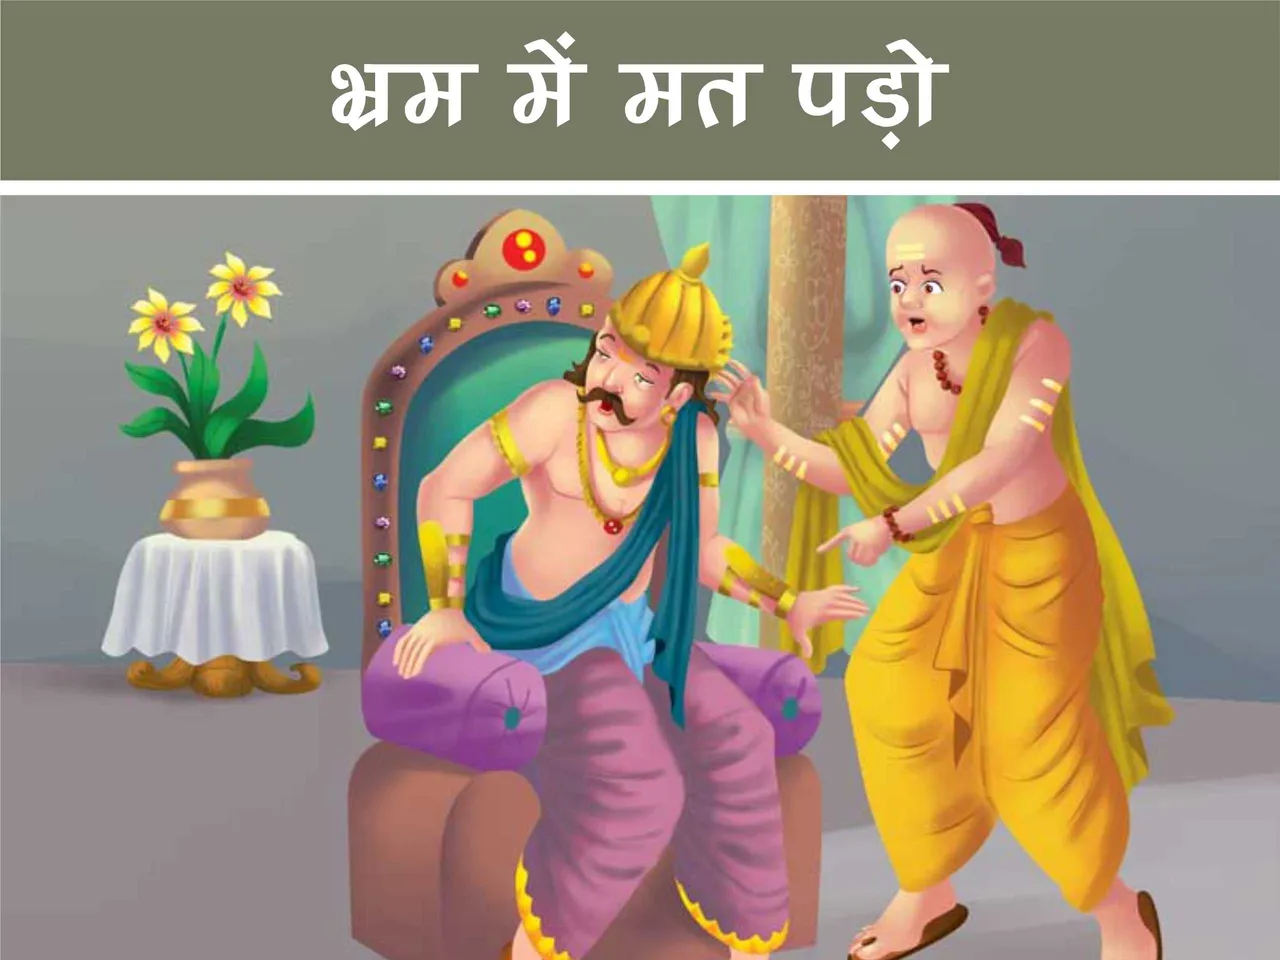 King And brahmin cartoon image